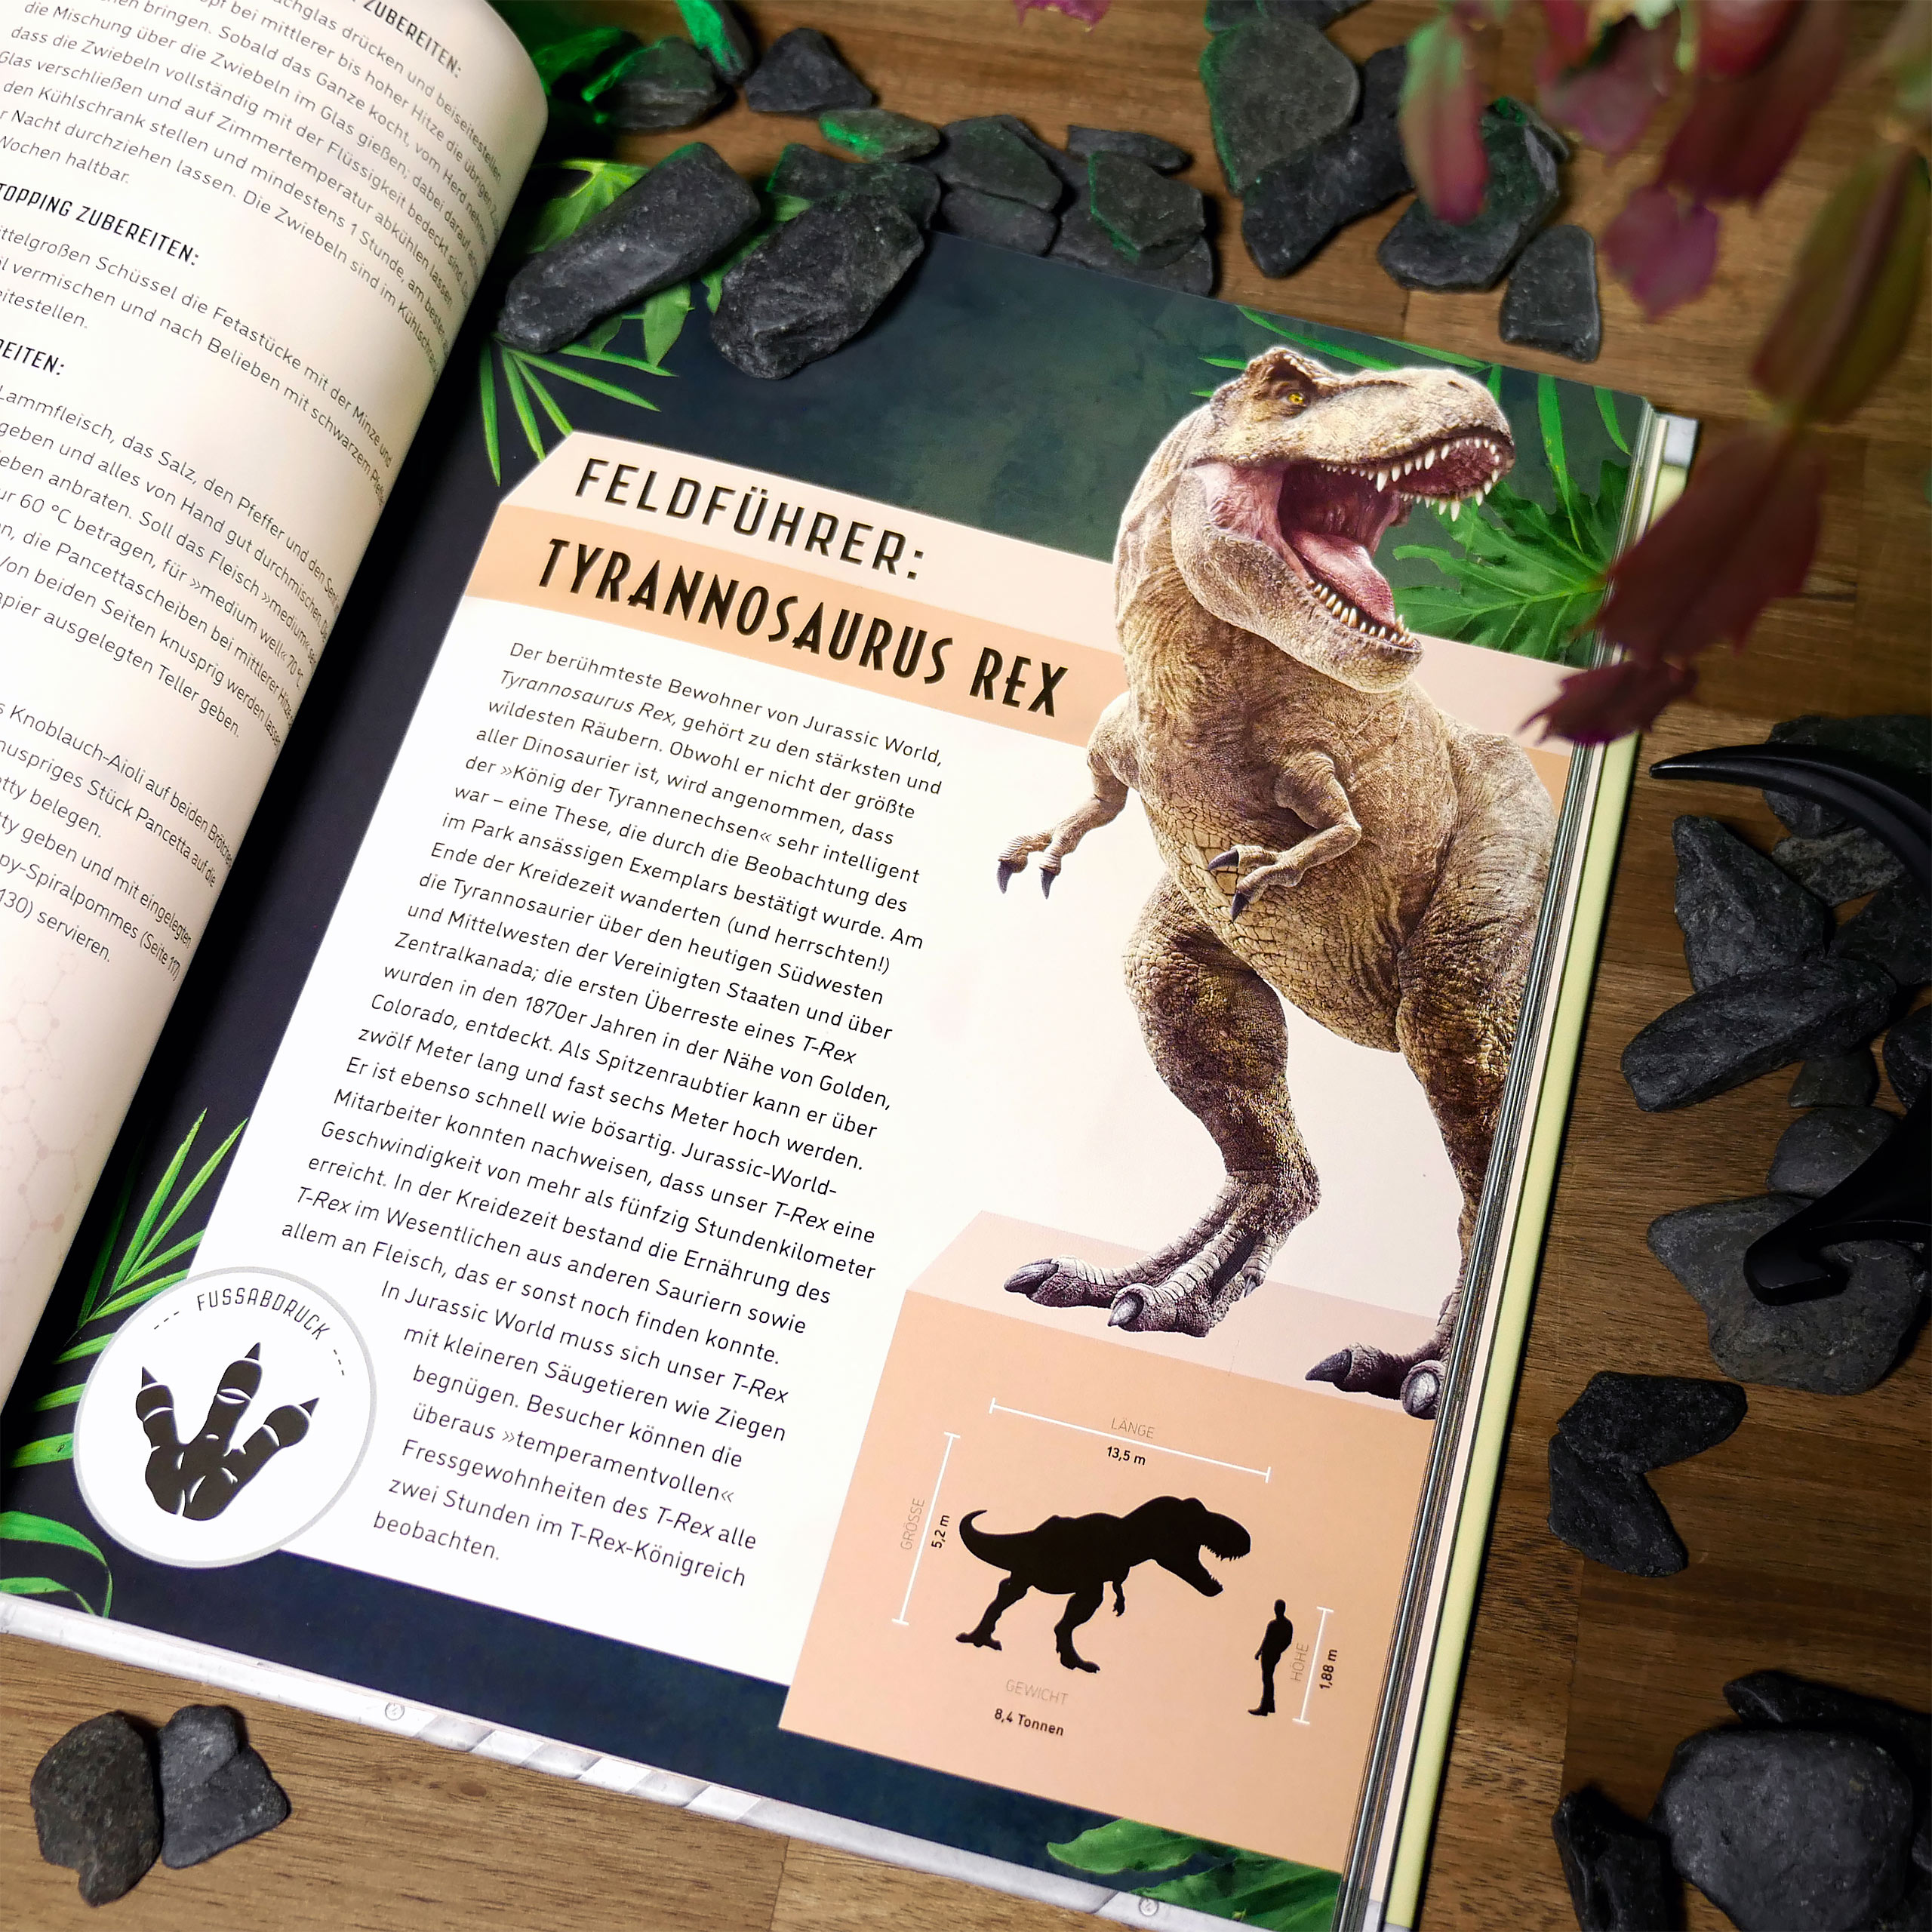 Jurassic World - The Official Cookbook